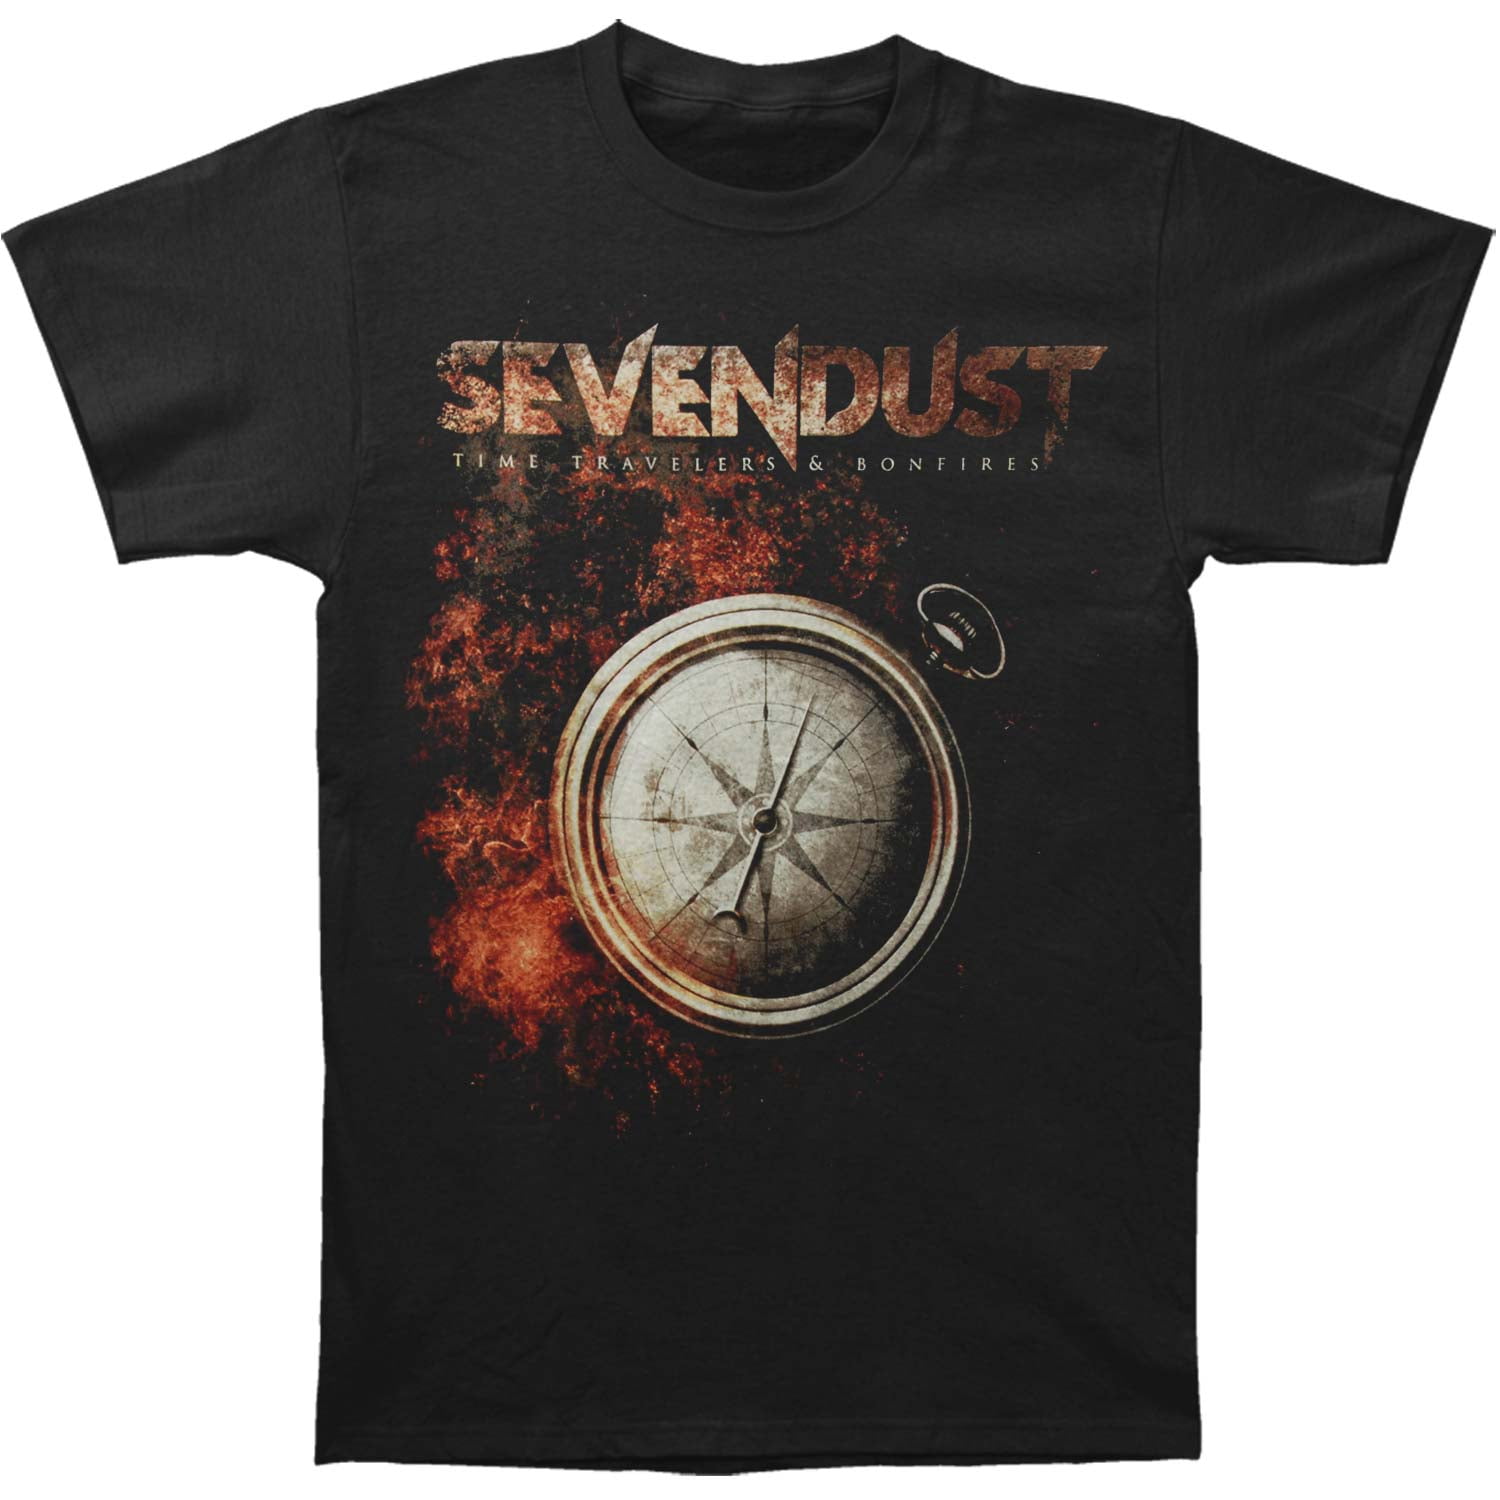 sevendust tour tshirts